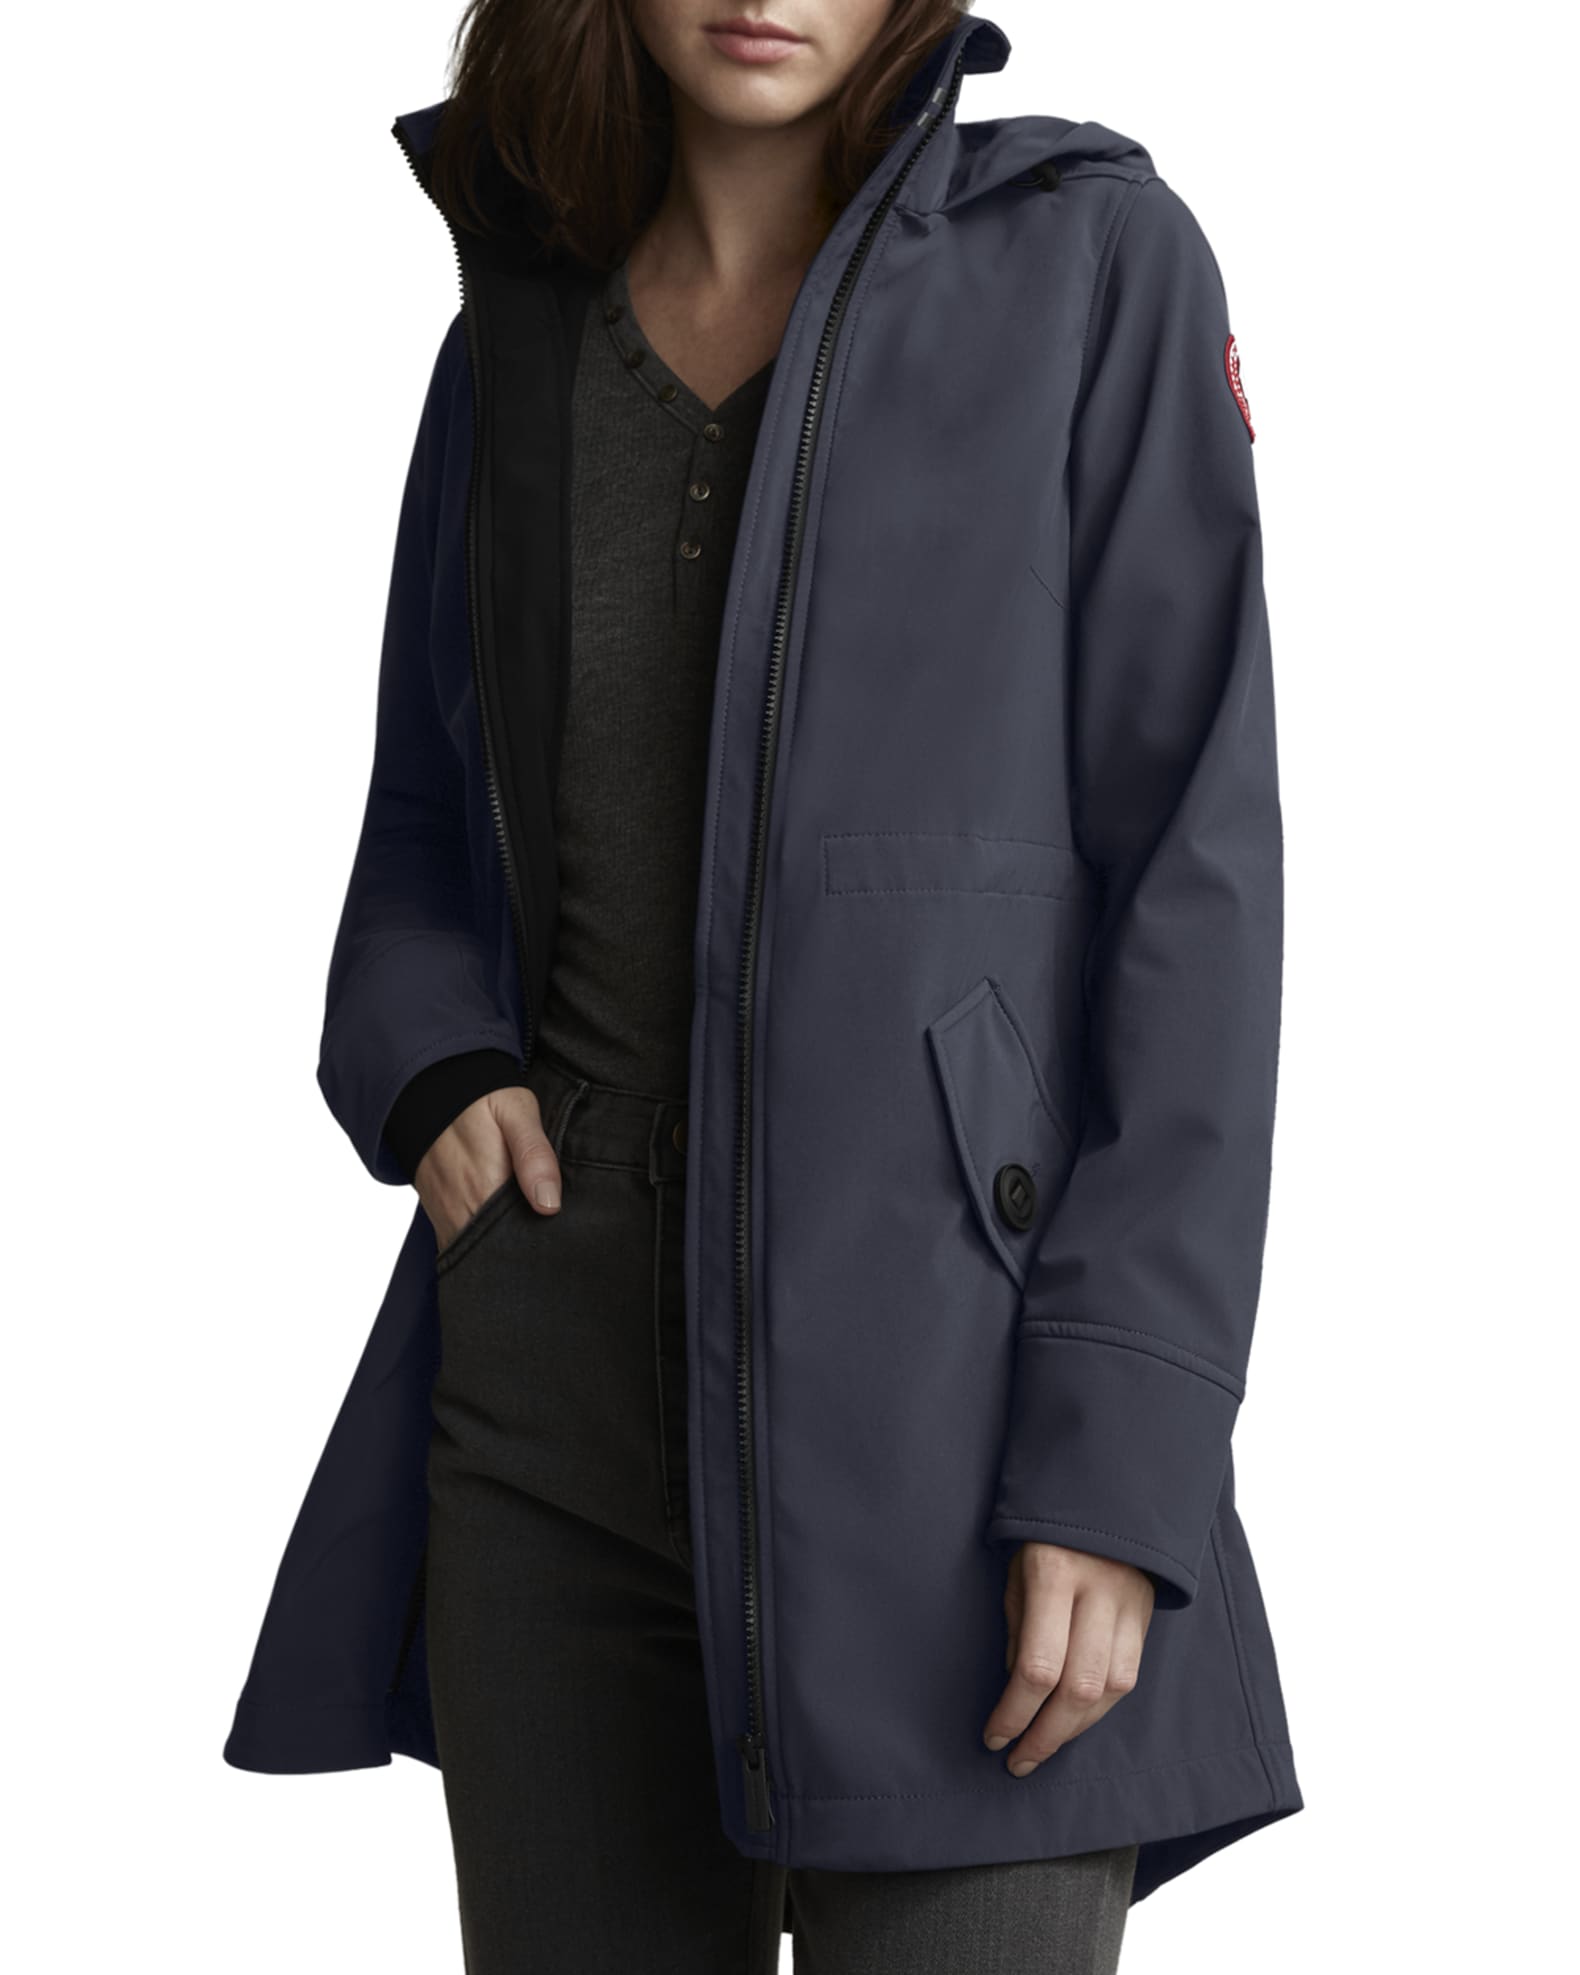 Avery A-Line Hooded Jacket